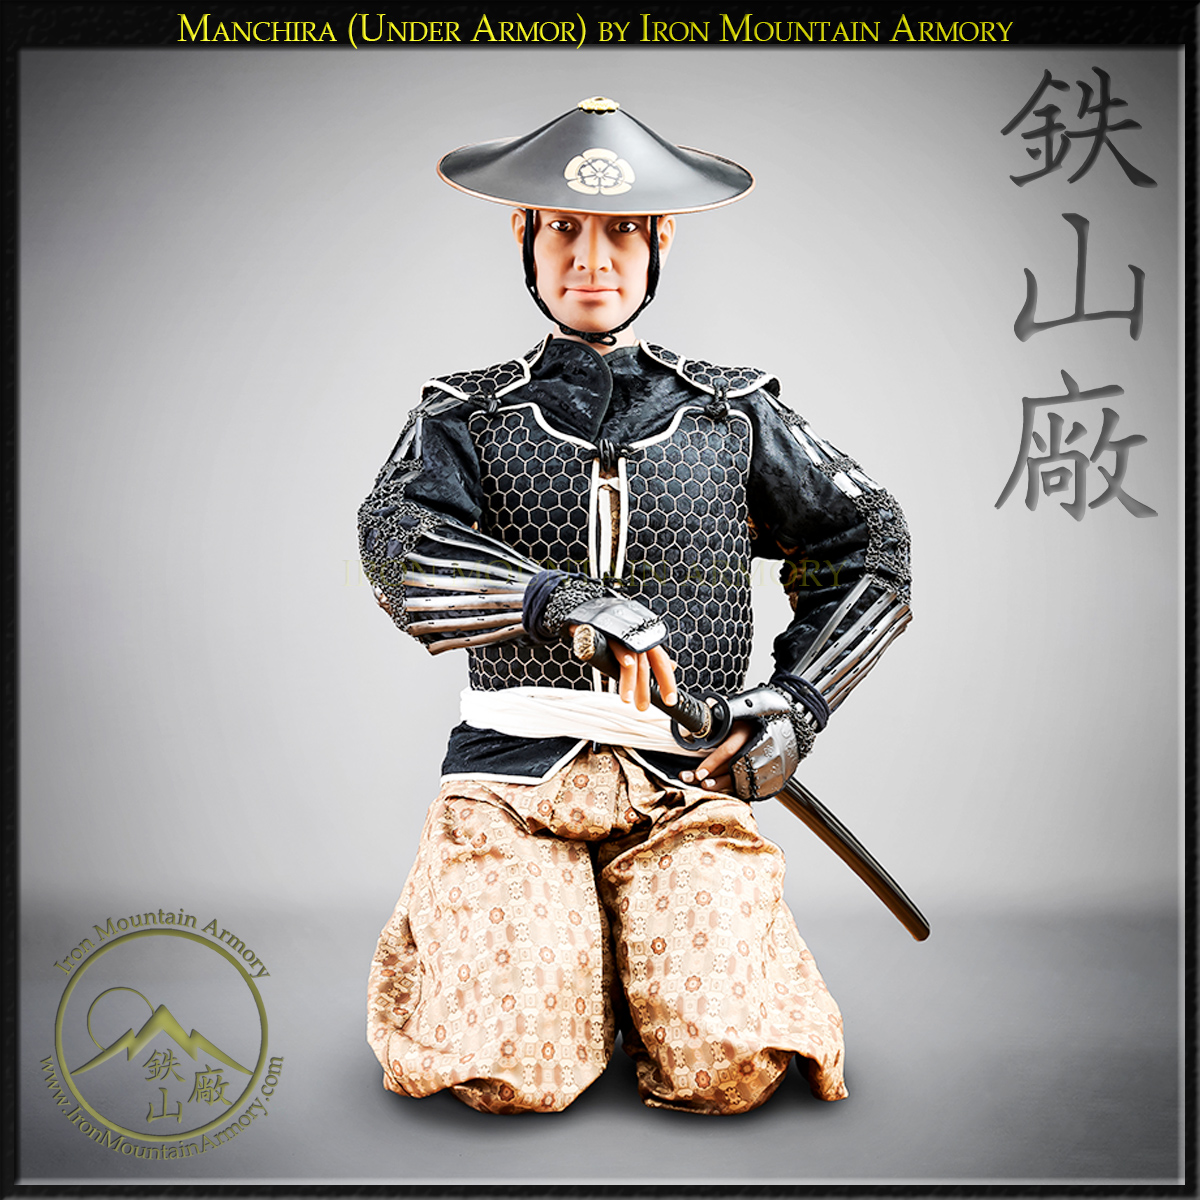 https://shop.samurai-armor.com/wp-content/uploads/2018/08/Manchira-Under-Armor-f-by-Iron-Mountain-Armory.jpg